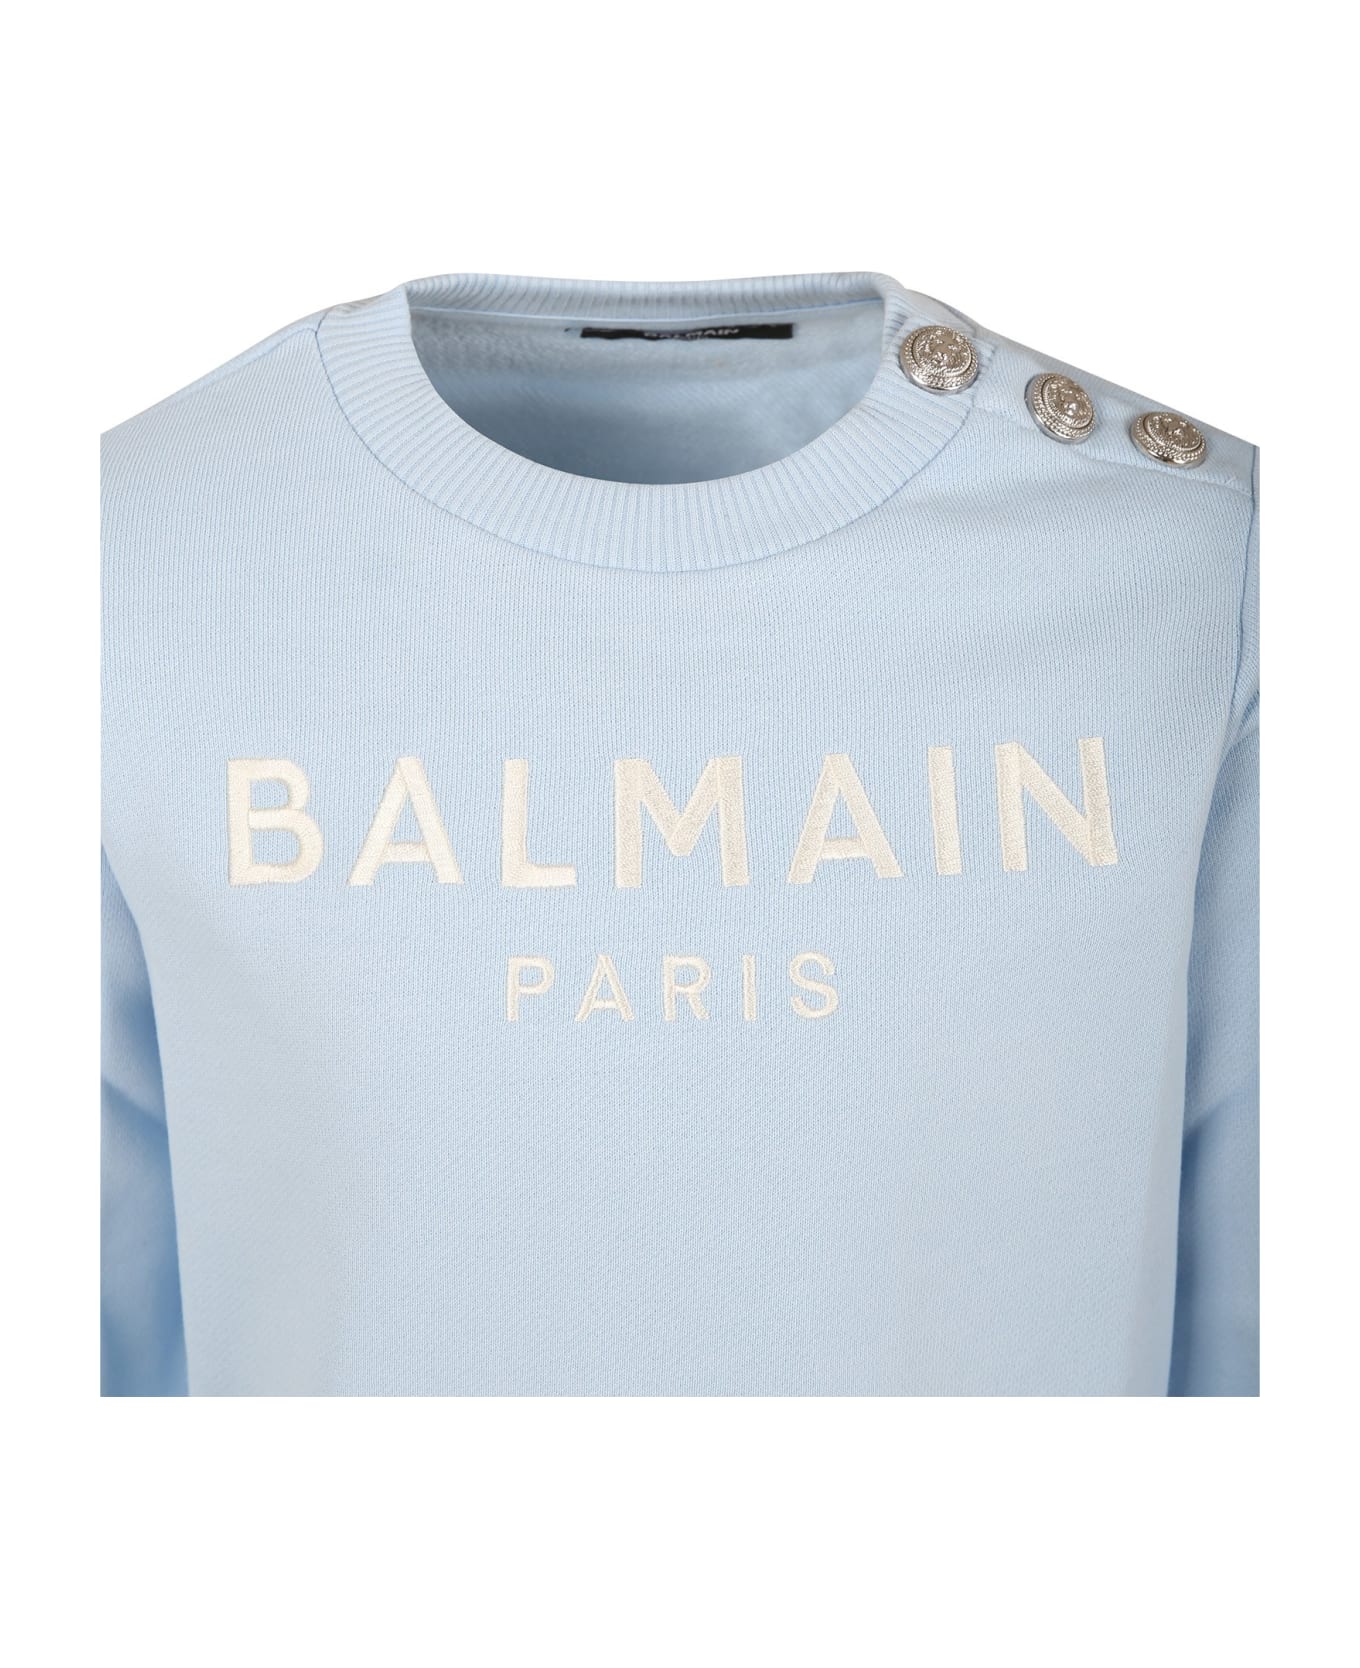 Balmain Light Blue Sweatshirt For Girl With Logo - Light Blue